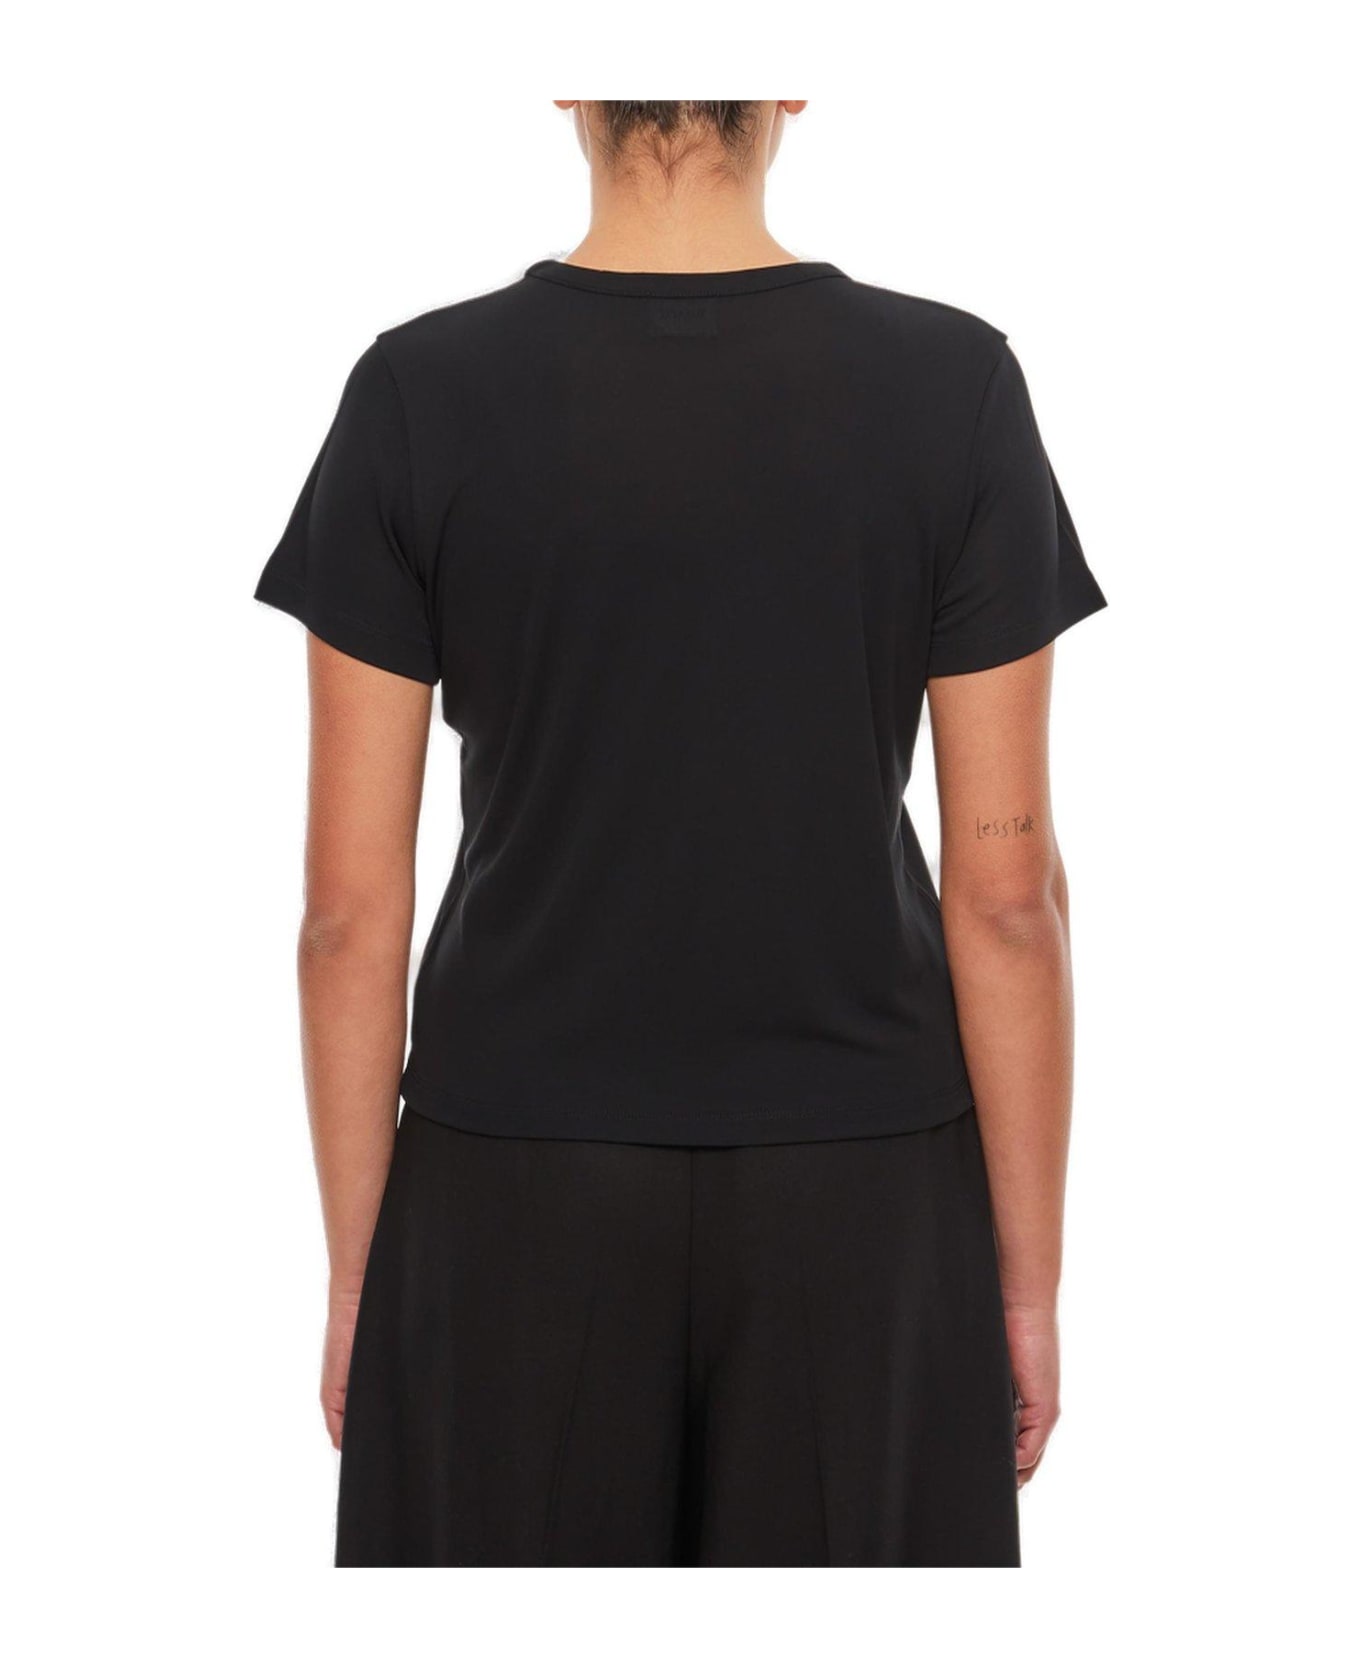 Khaite The Emmylou Crewneck T-shirt - Black